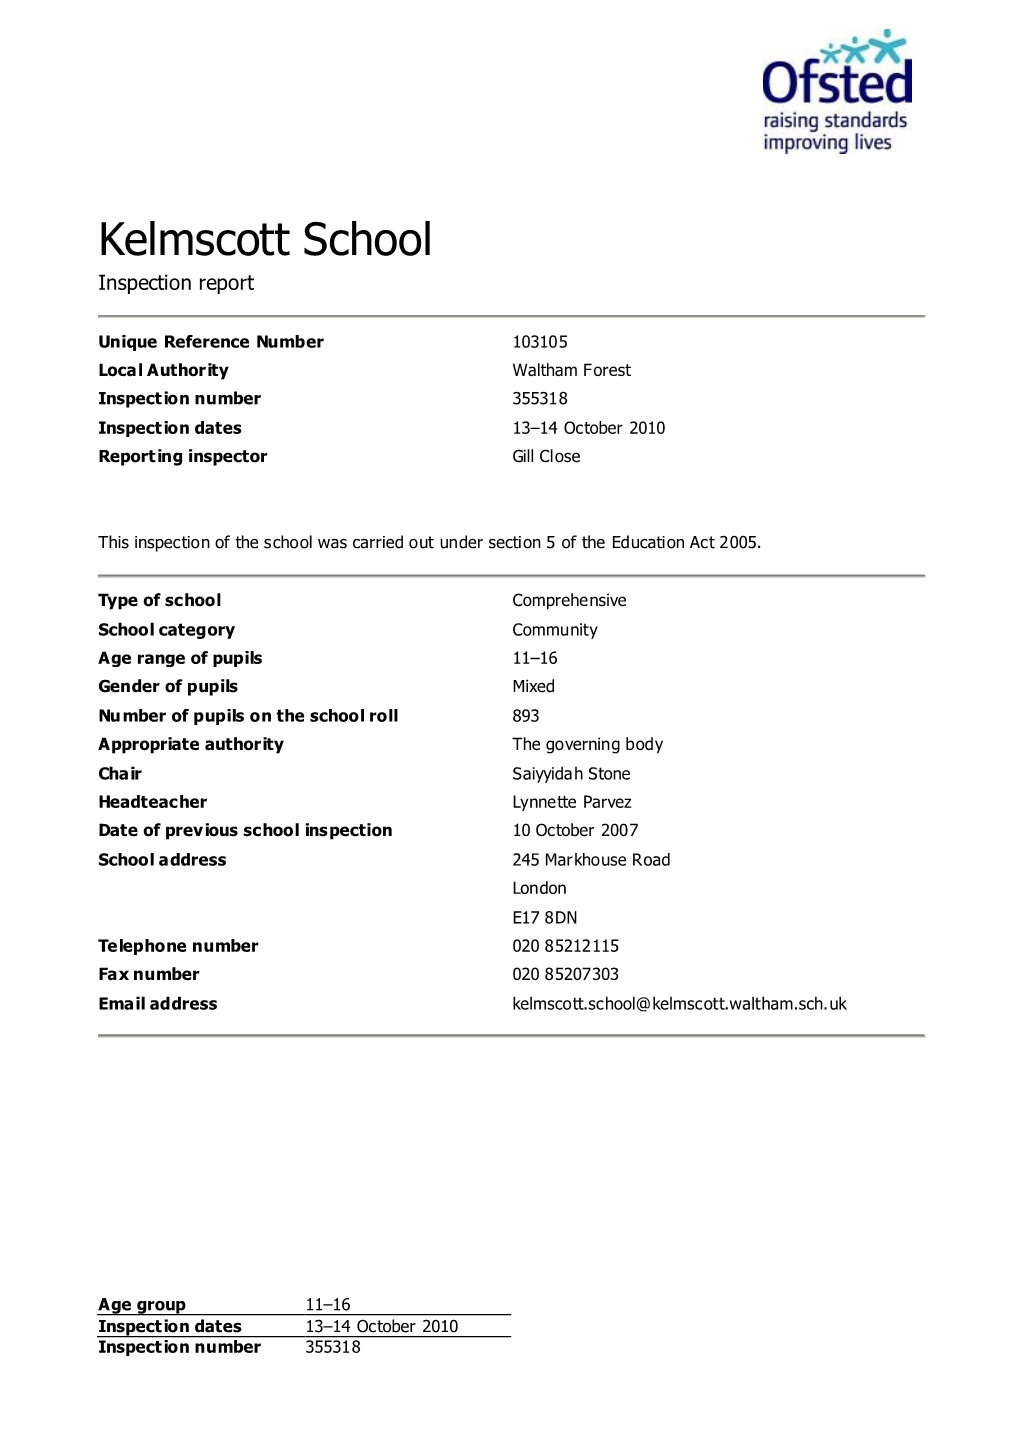 Kelmscott School Inspection Report